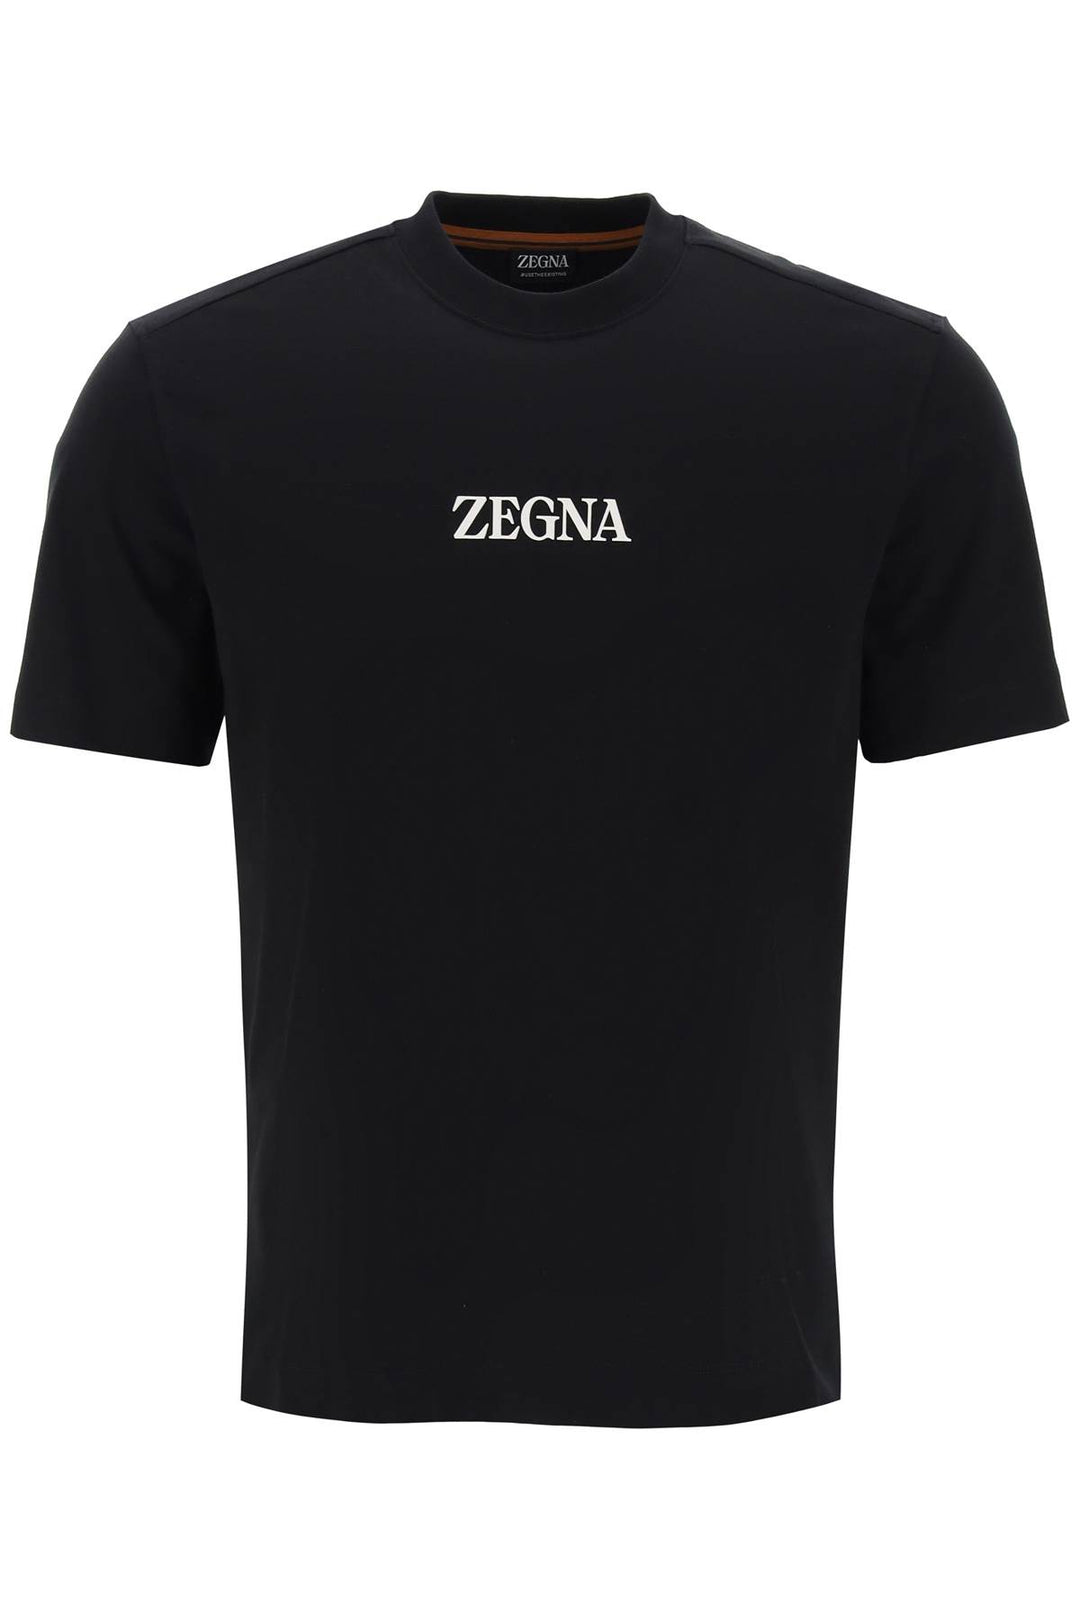 T Shirt Con Logo Gommato - Zegna - Uomo